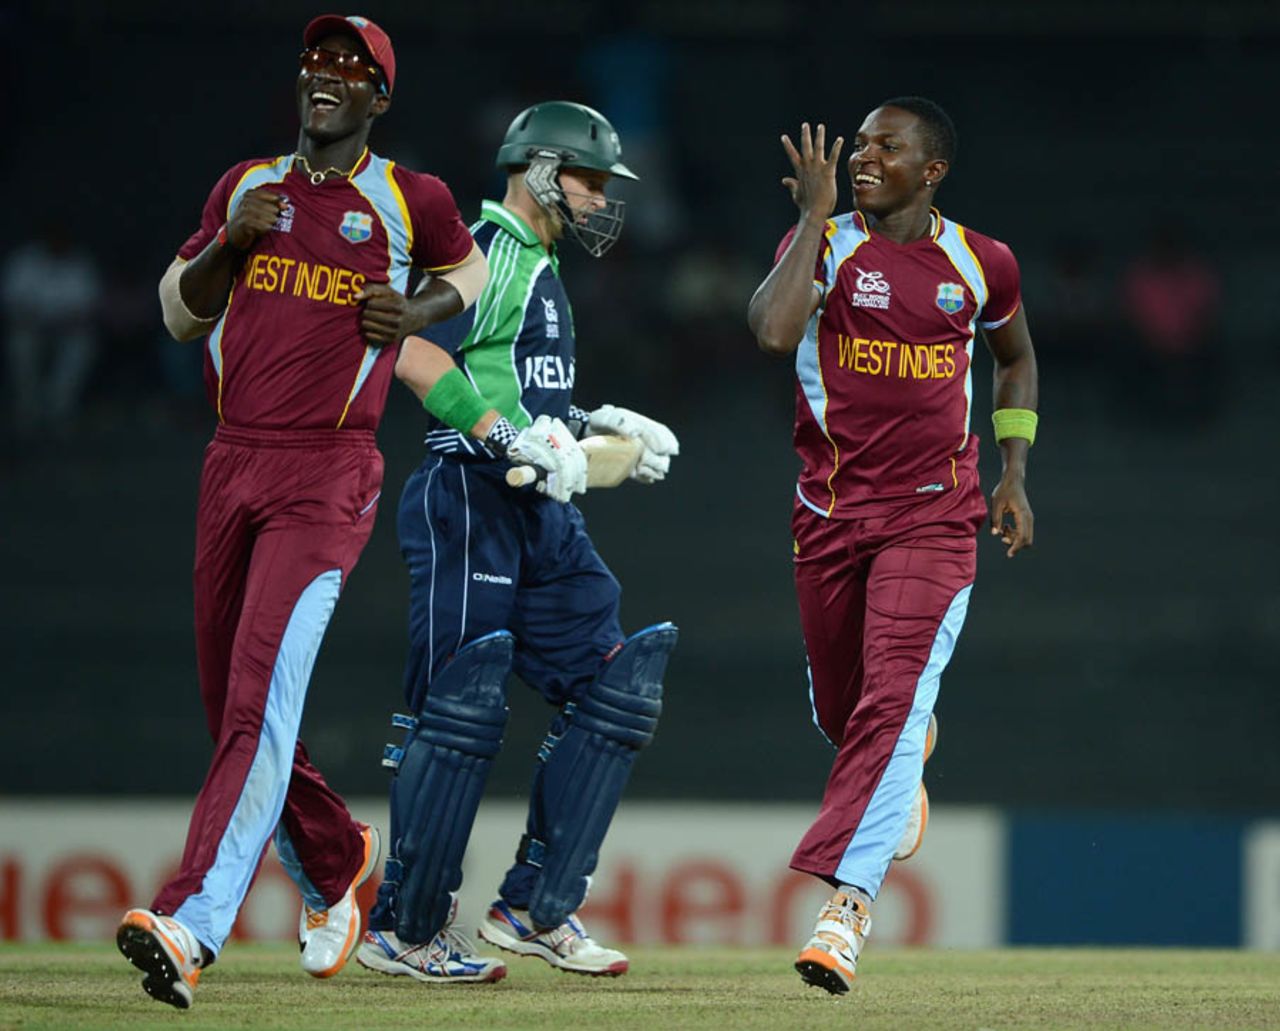 Fidel Edwards and Darren Sammy celebrate after William Porterfield's wicket, Ireland v West Indies, World Twenty20 2012, Group B, Colombo, September 24, 2012